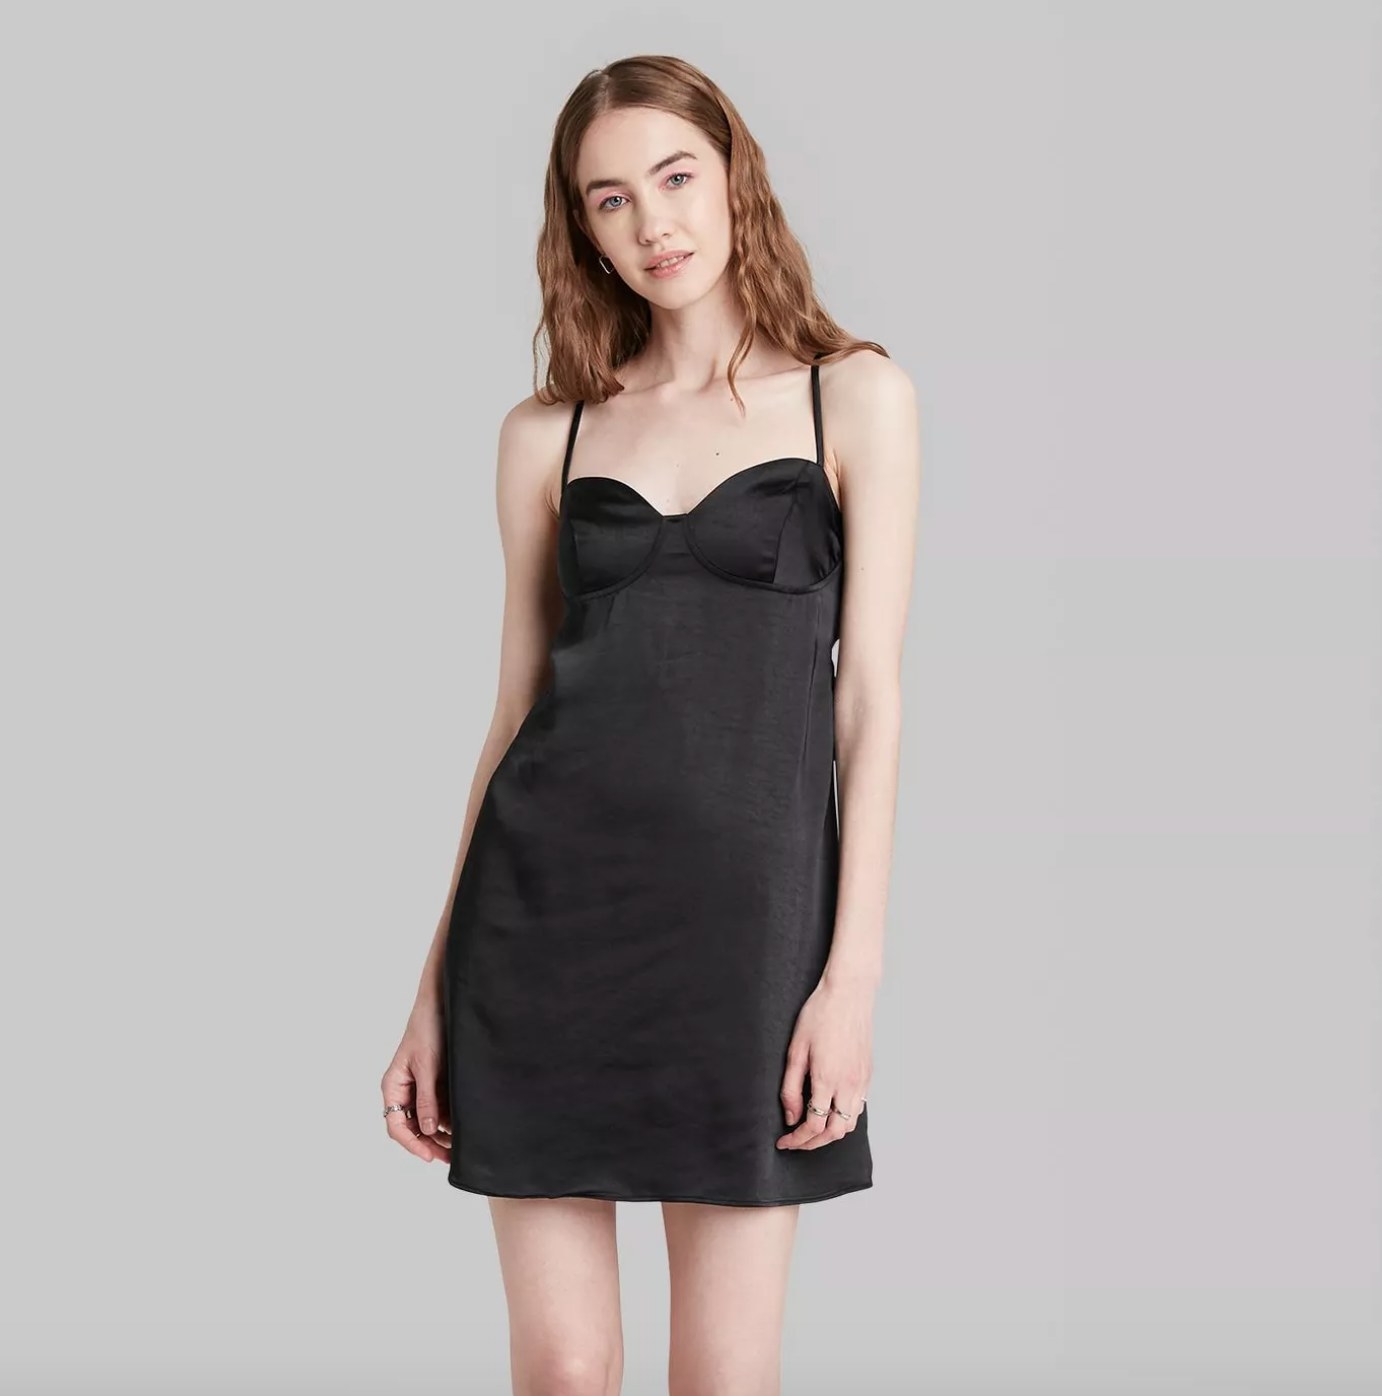 Model in a black strapped mini dress